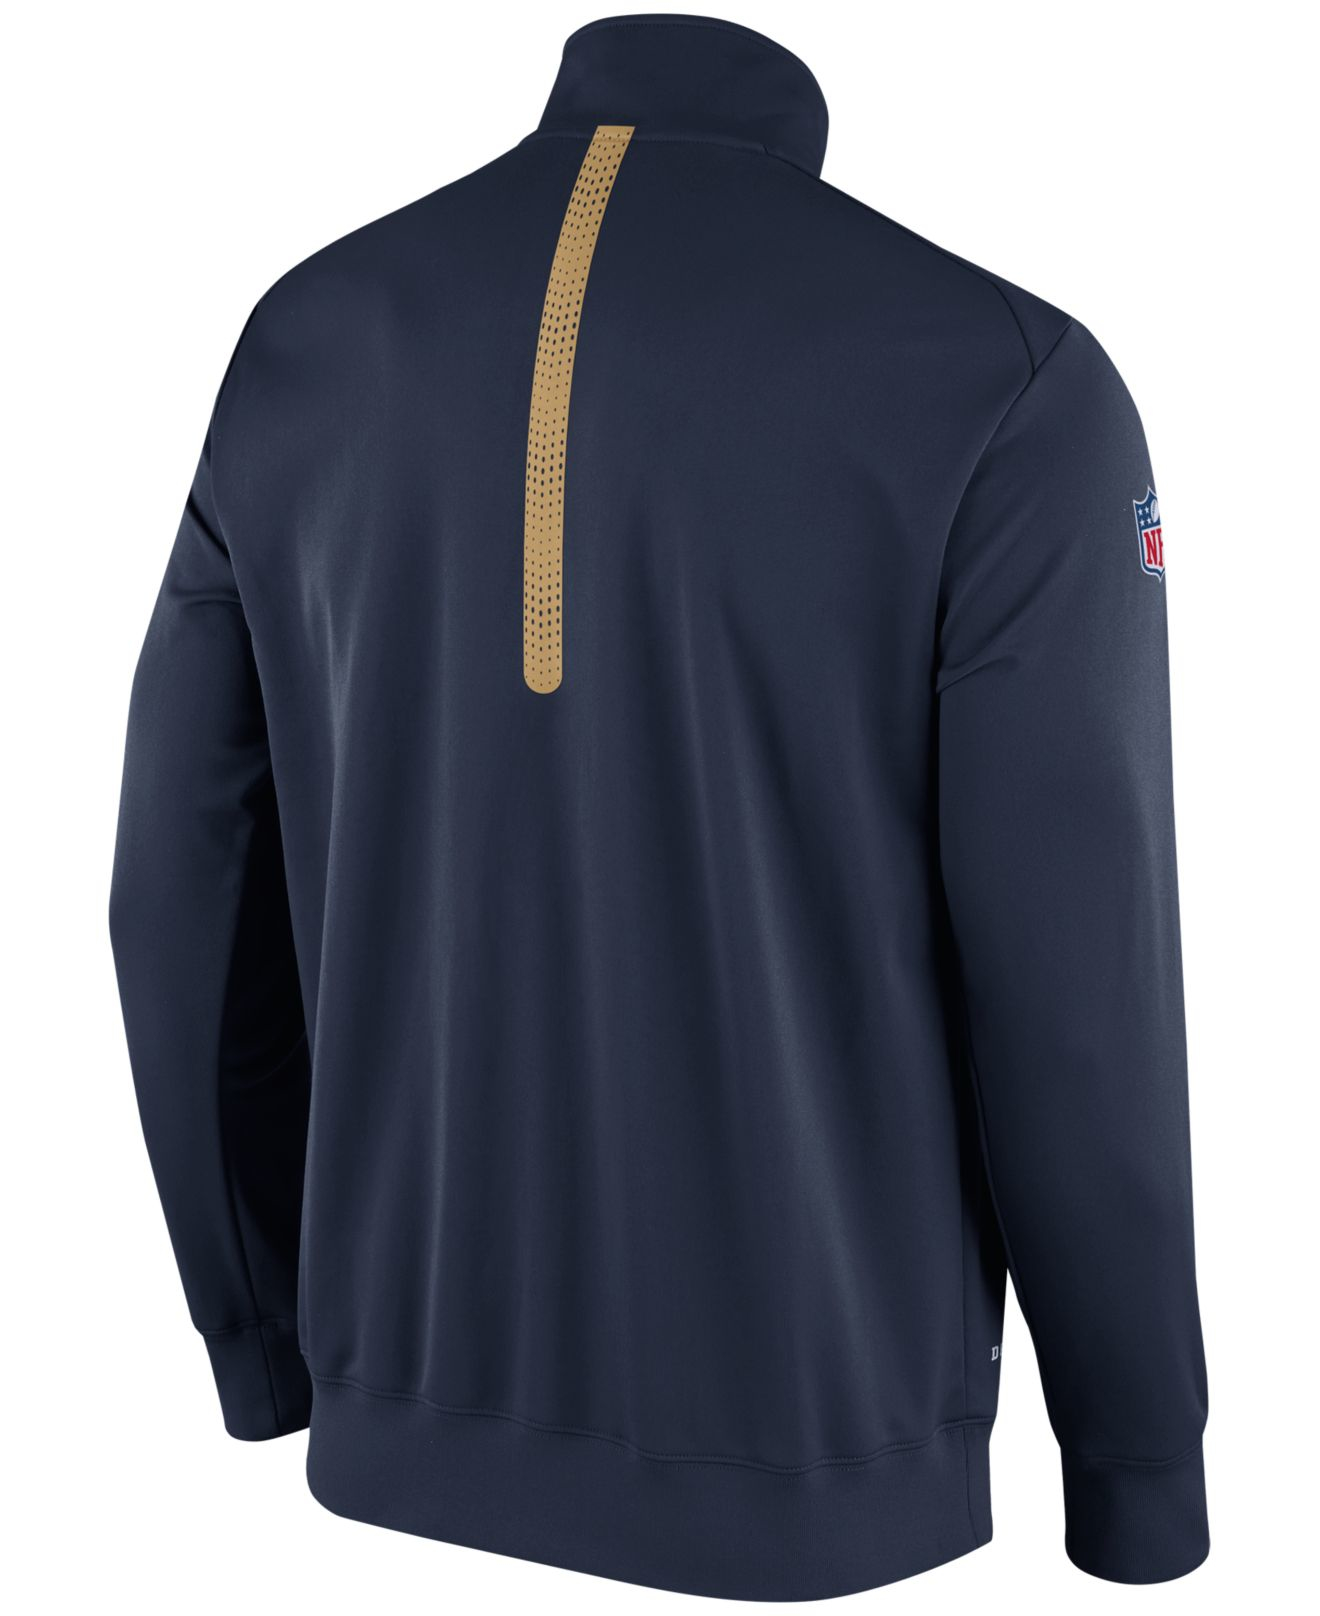 Lyst - Nike Men's Los Angeles Rams Empower Jacket in Blue for Men